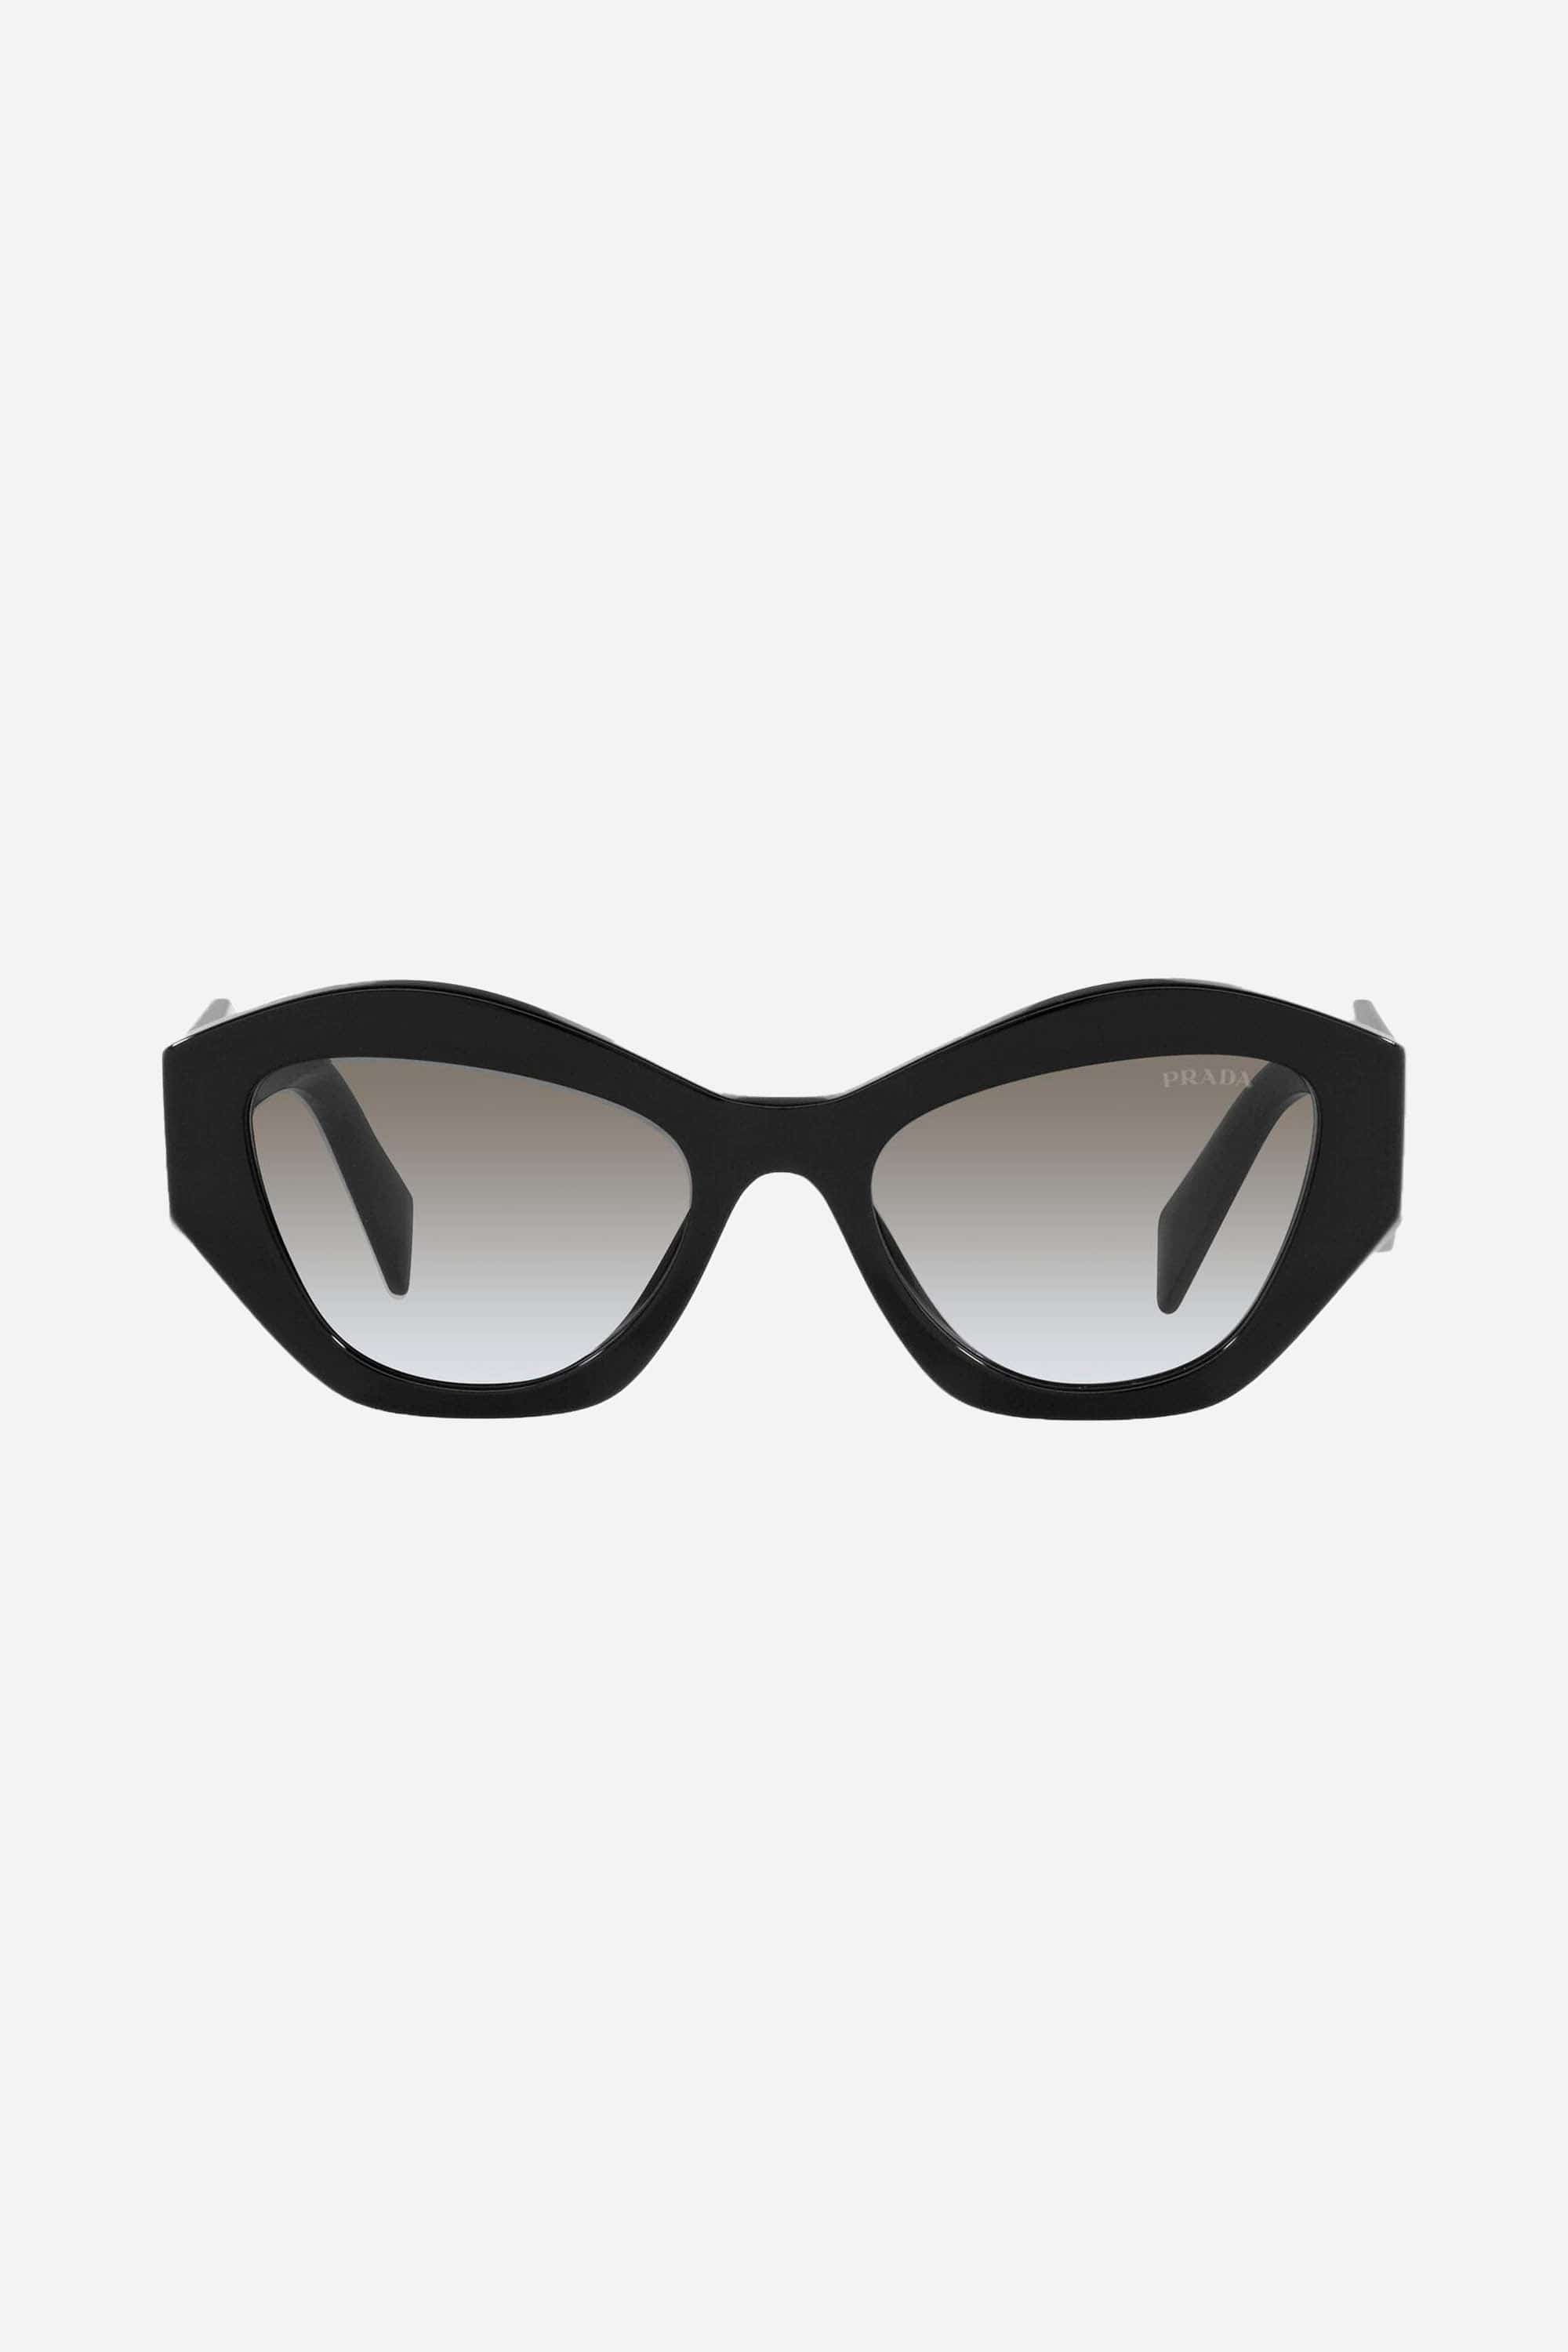 Prada oval black sunglasses featuring iconic logo - Eyewear Club